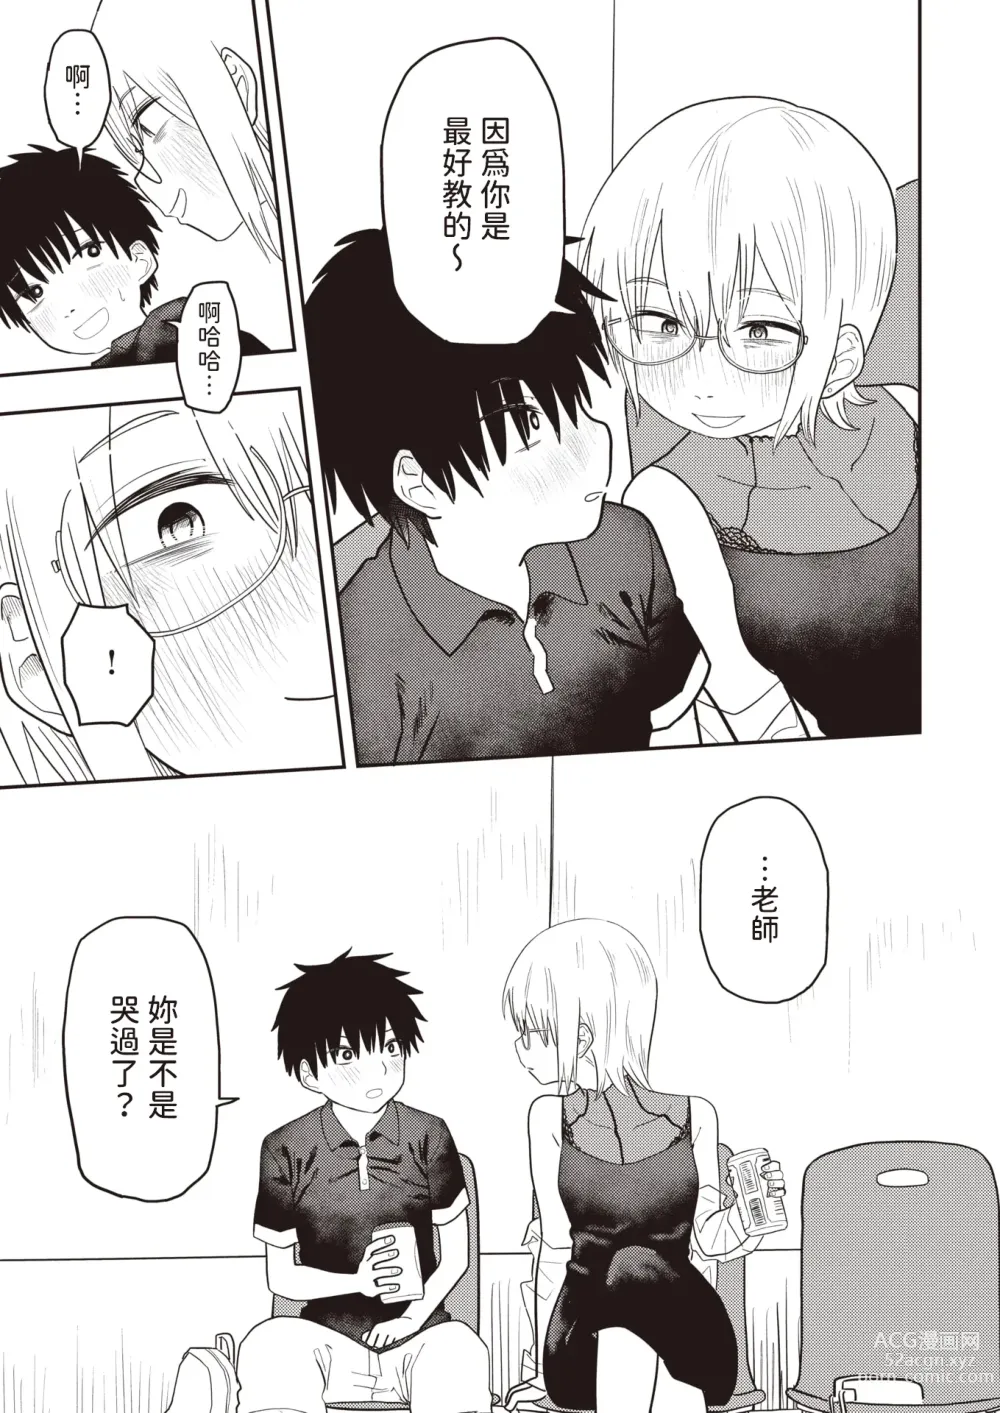 Page 7 of manga Hidoi yo Kiriyama Sensei - Thats really mean!